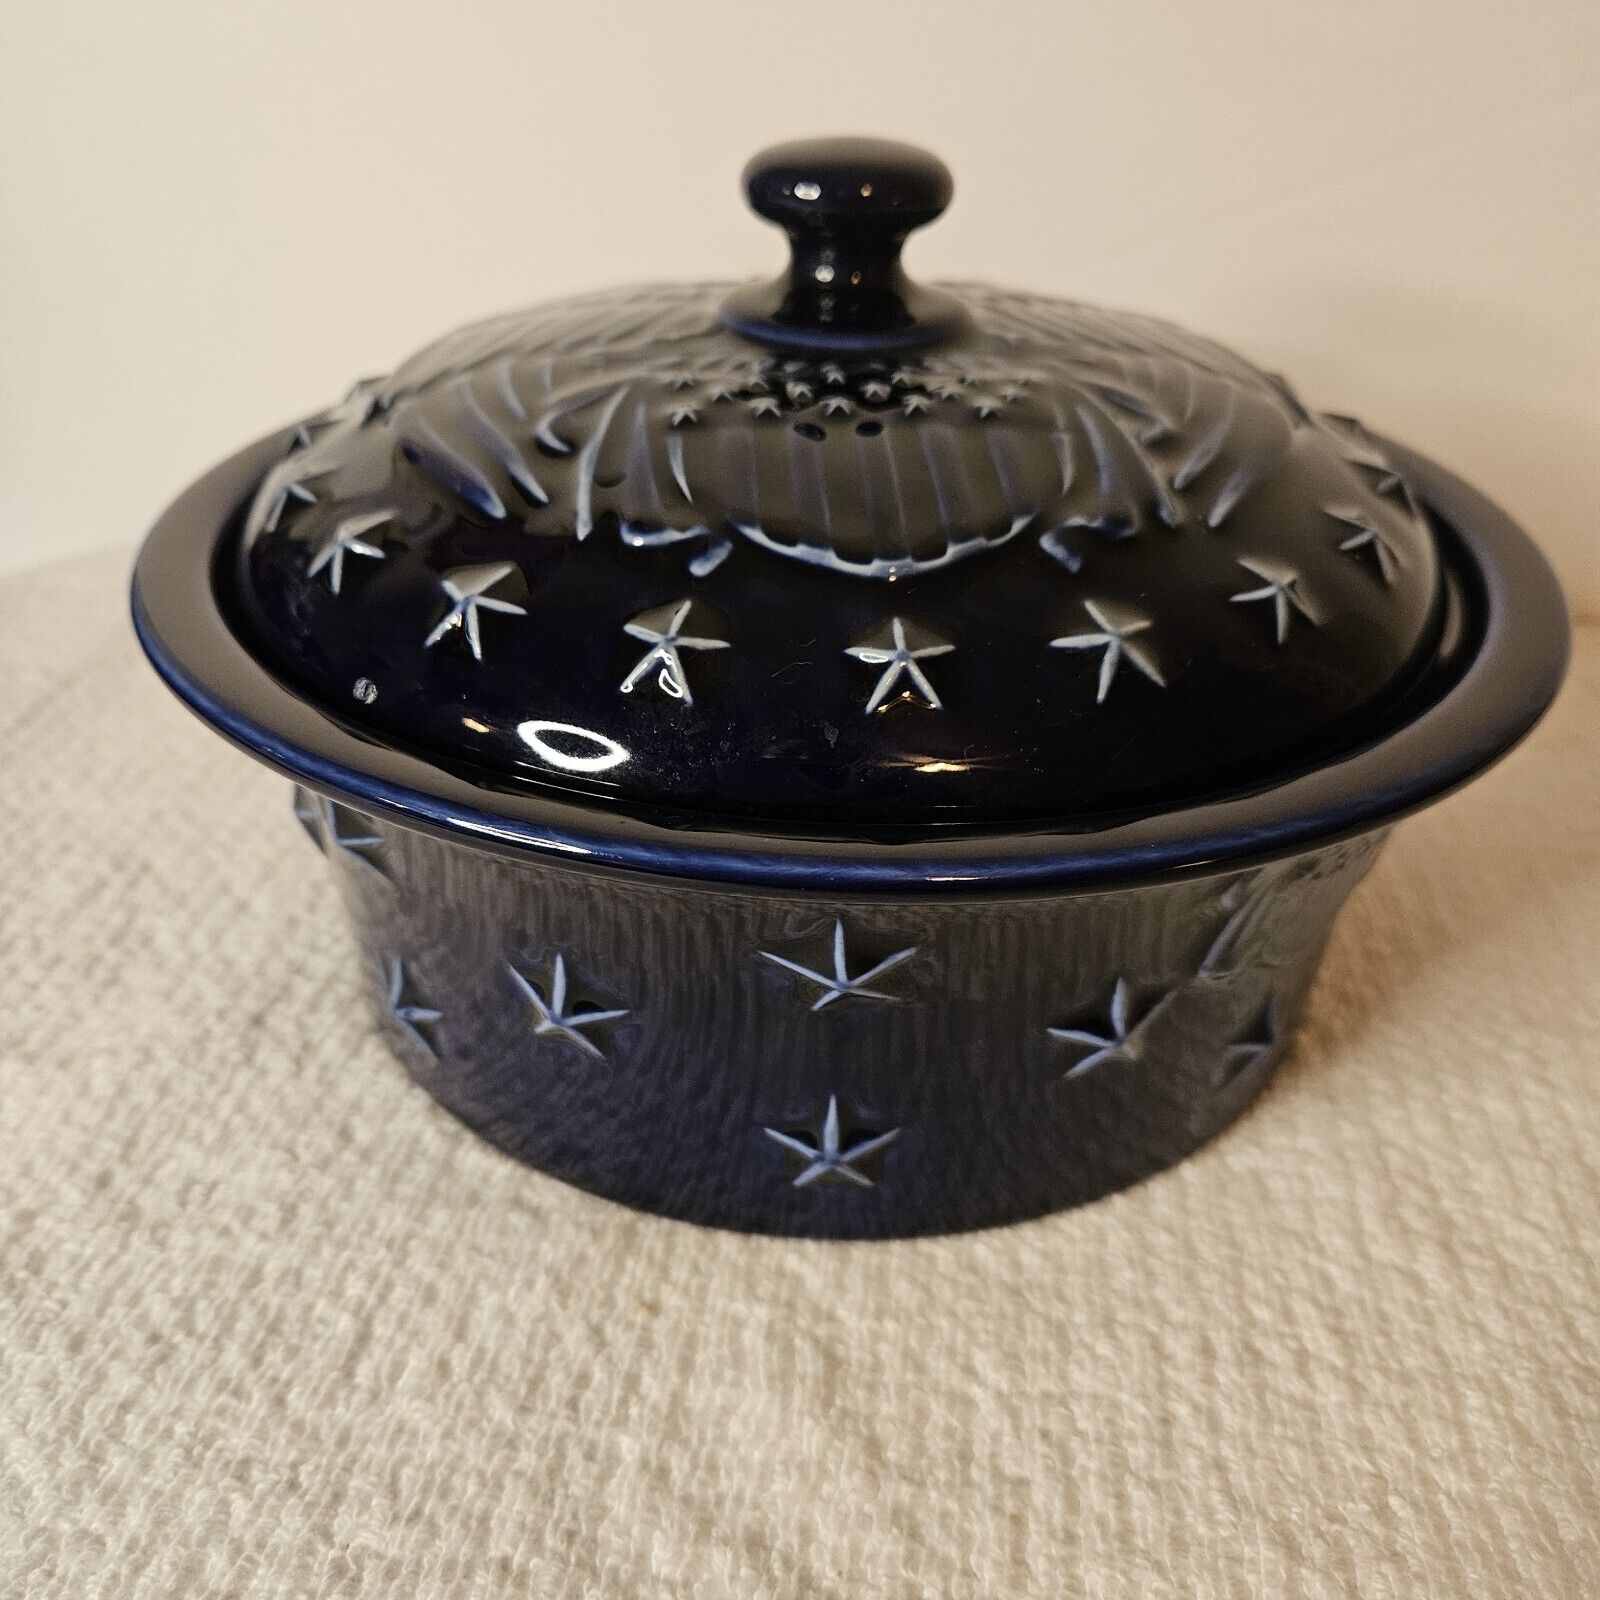 Longaberger Pottery American Eagle Cobalt Blue Round Covered Casserole Dish